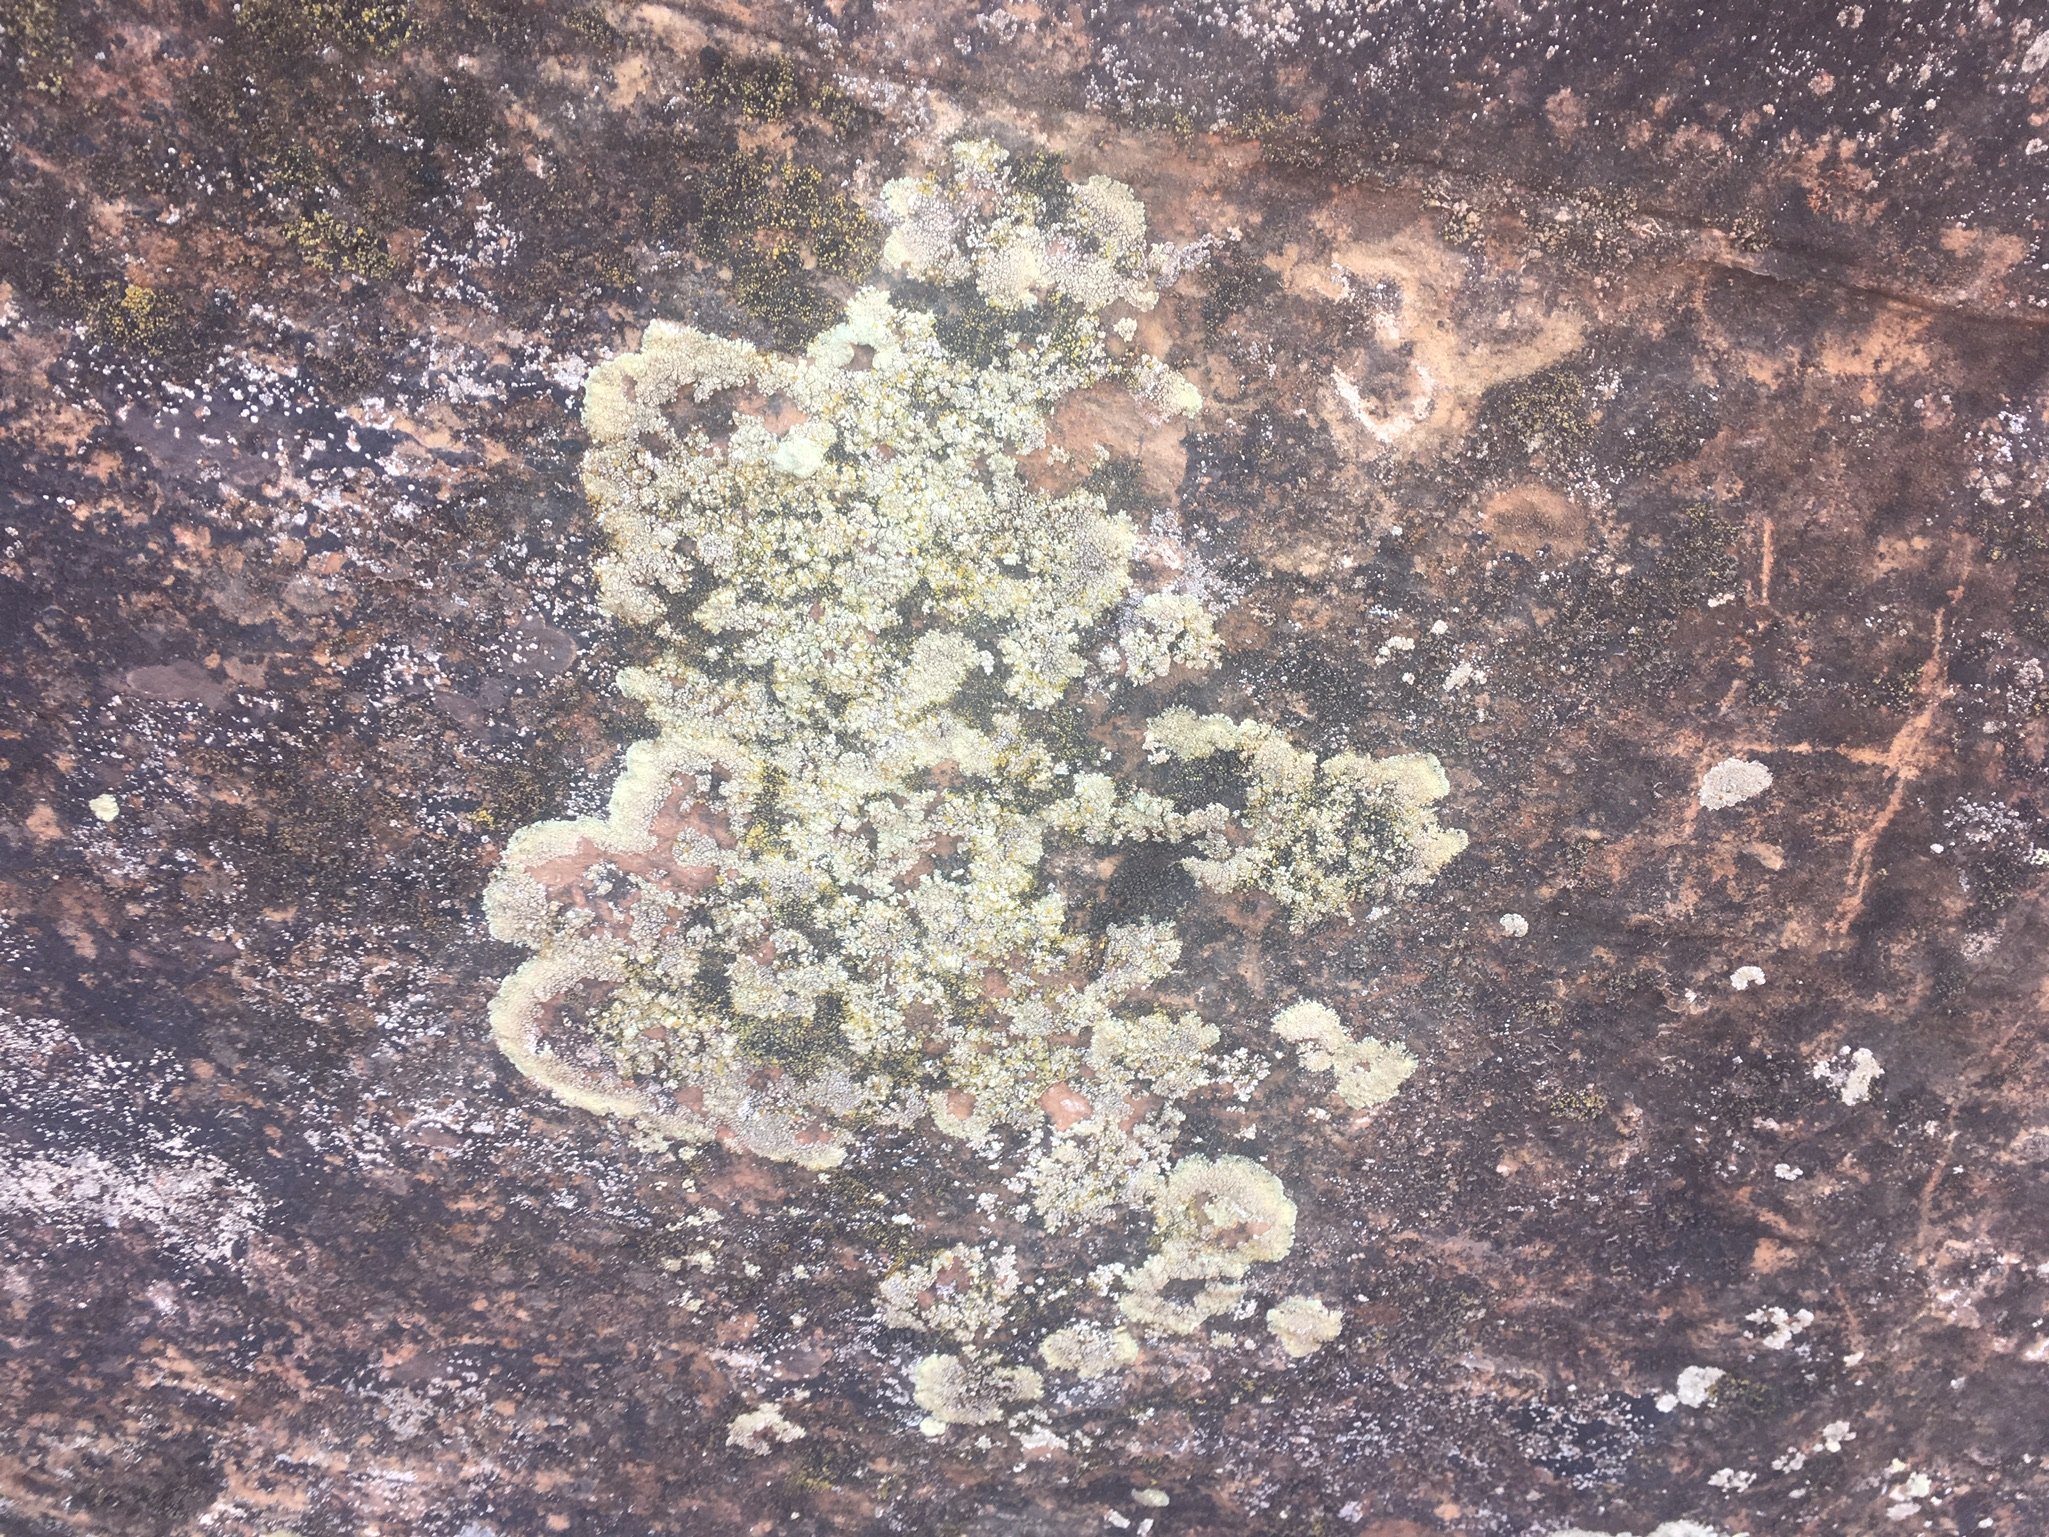 San Rafael lichen